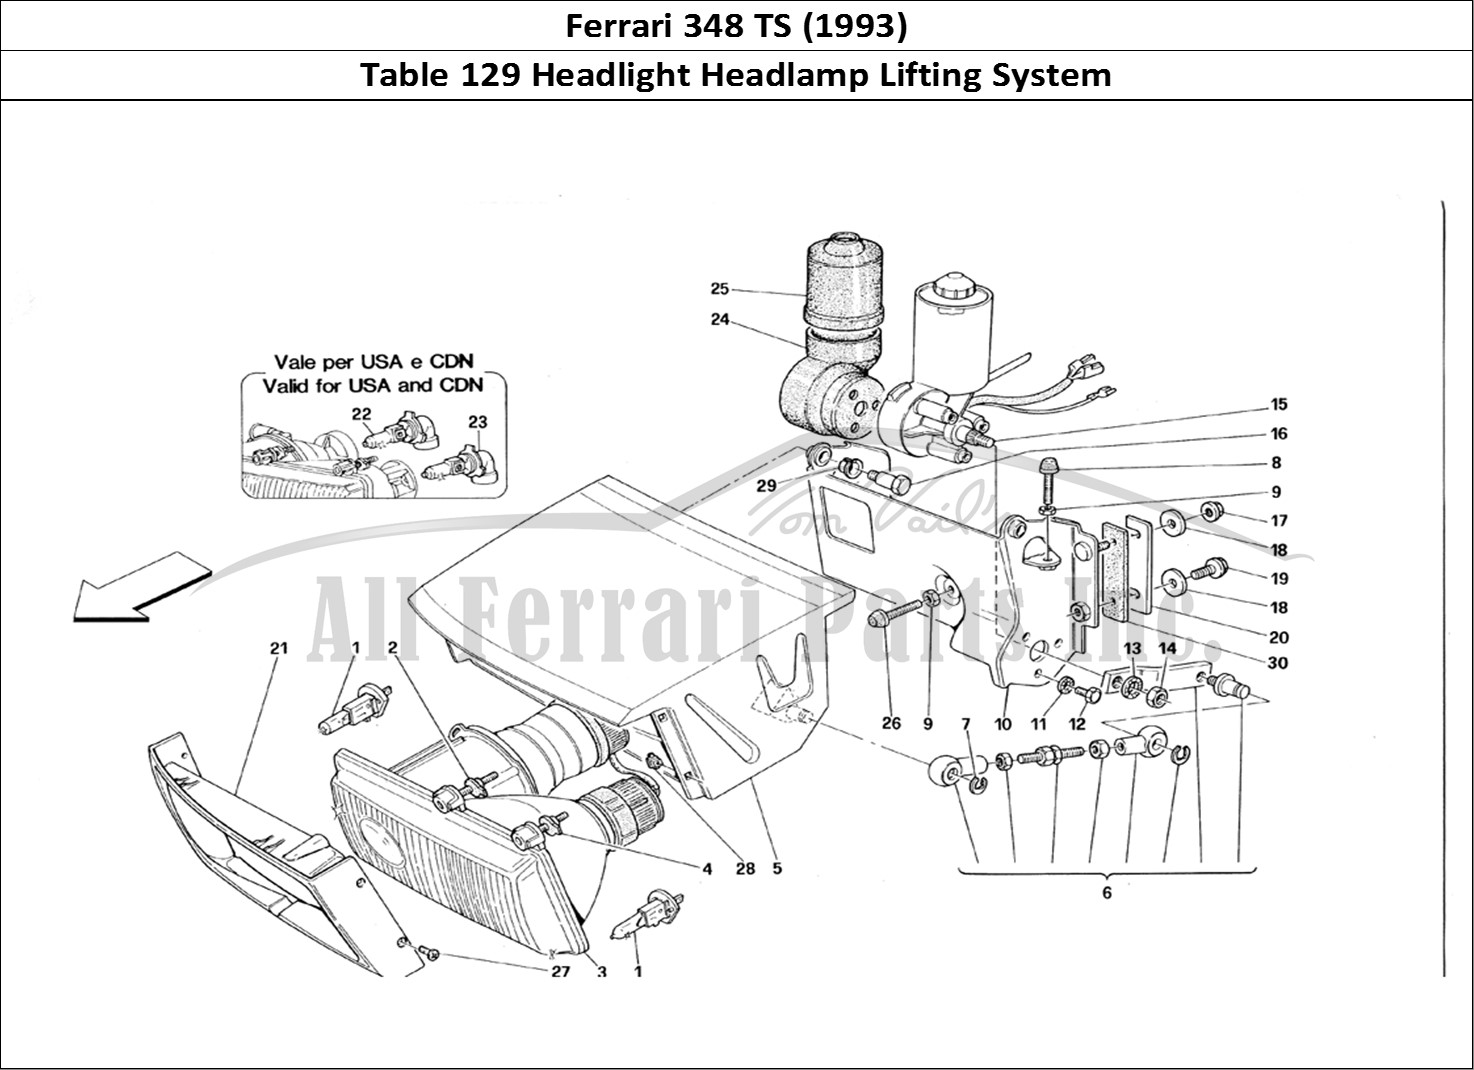 Ferrari Parts Ferrari 348 TB (1993) Page 129 Lights Lifting Device and